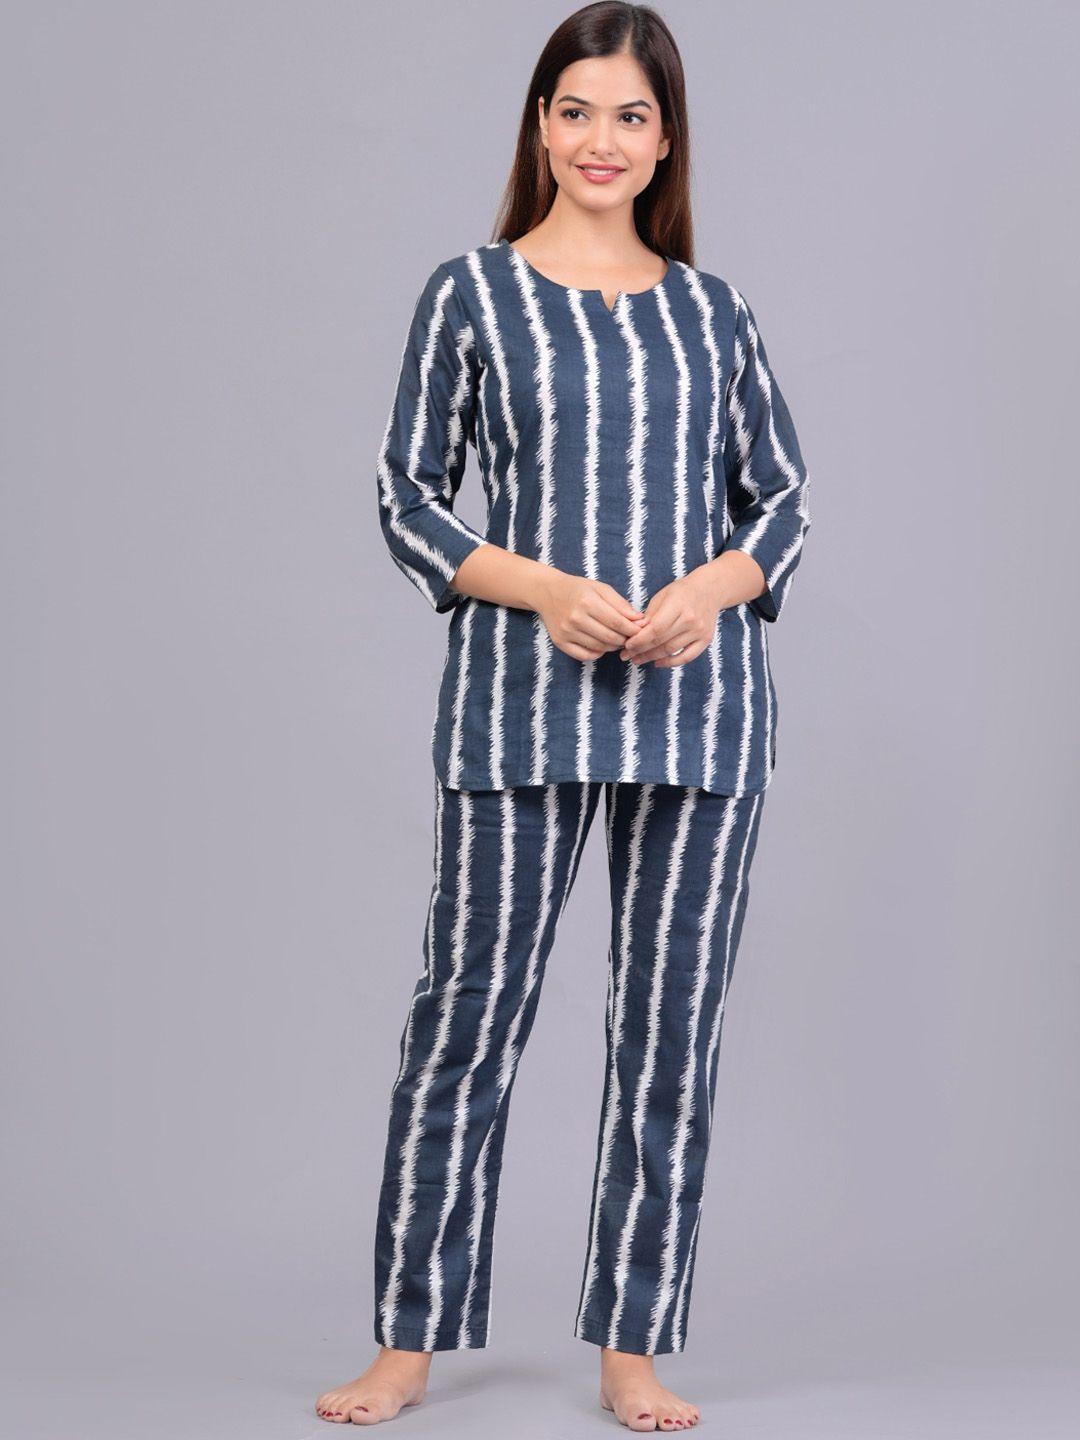 bachuu striped top with pyjamas